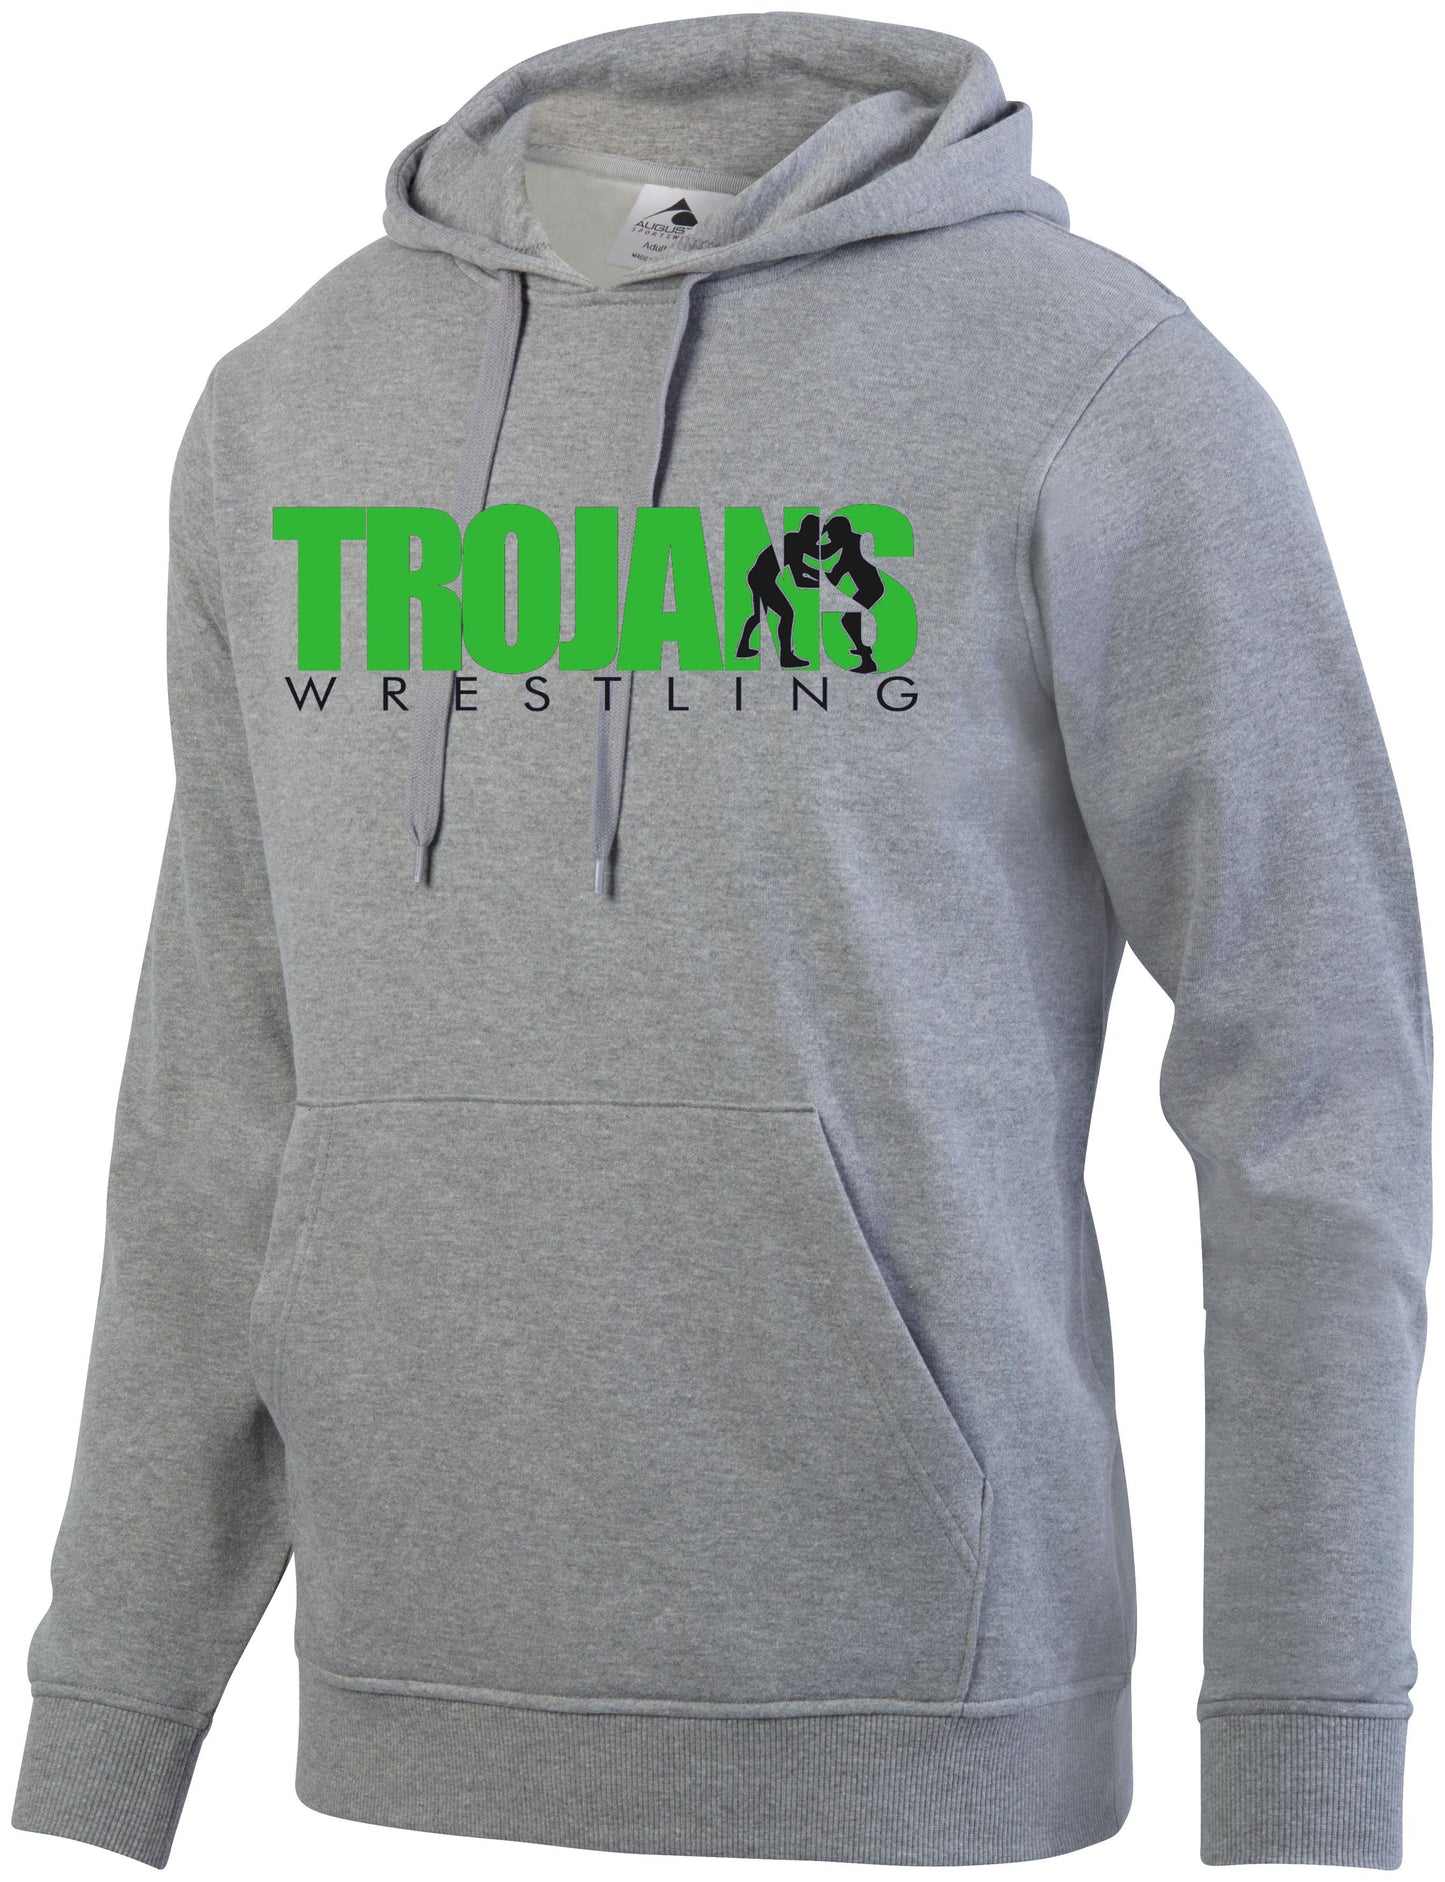 Twiggs Academy - Trojans Wrestling - Charcoal Heather (Tee/Hoodie/Sweatshirt) - Southern Grace Creations